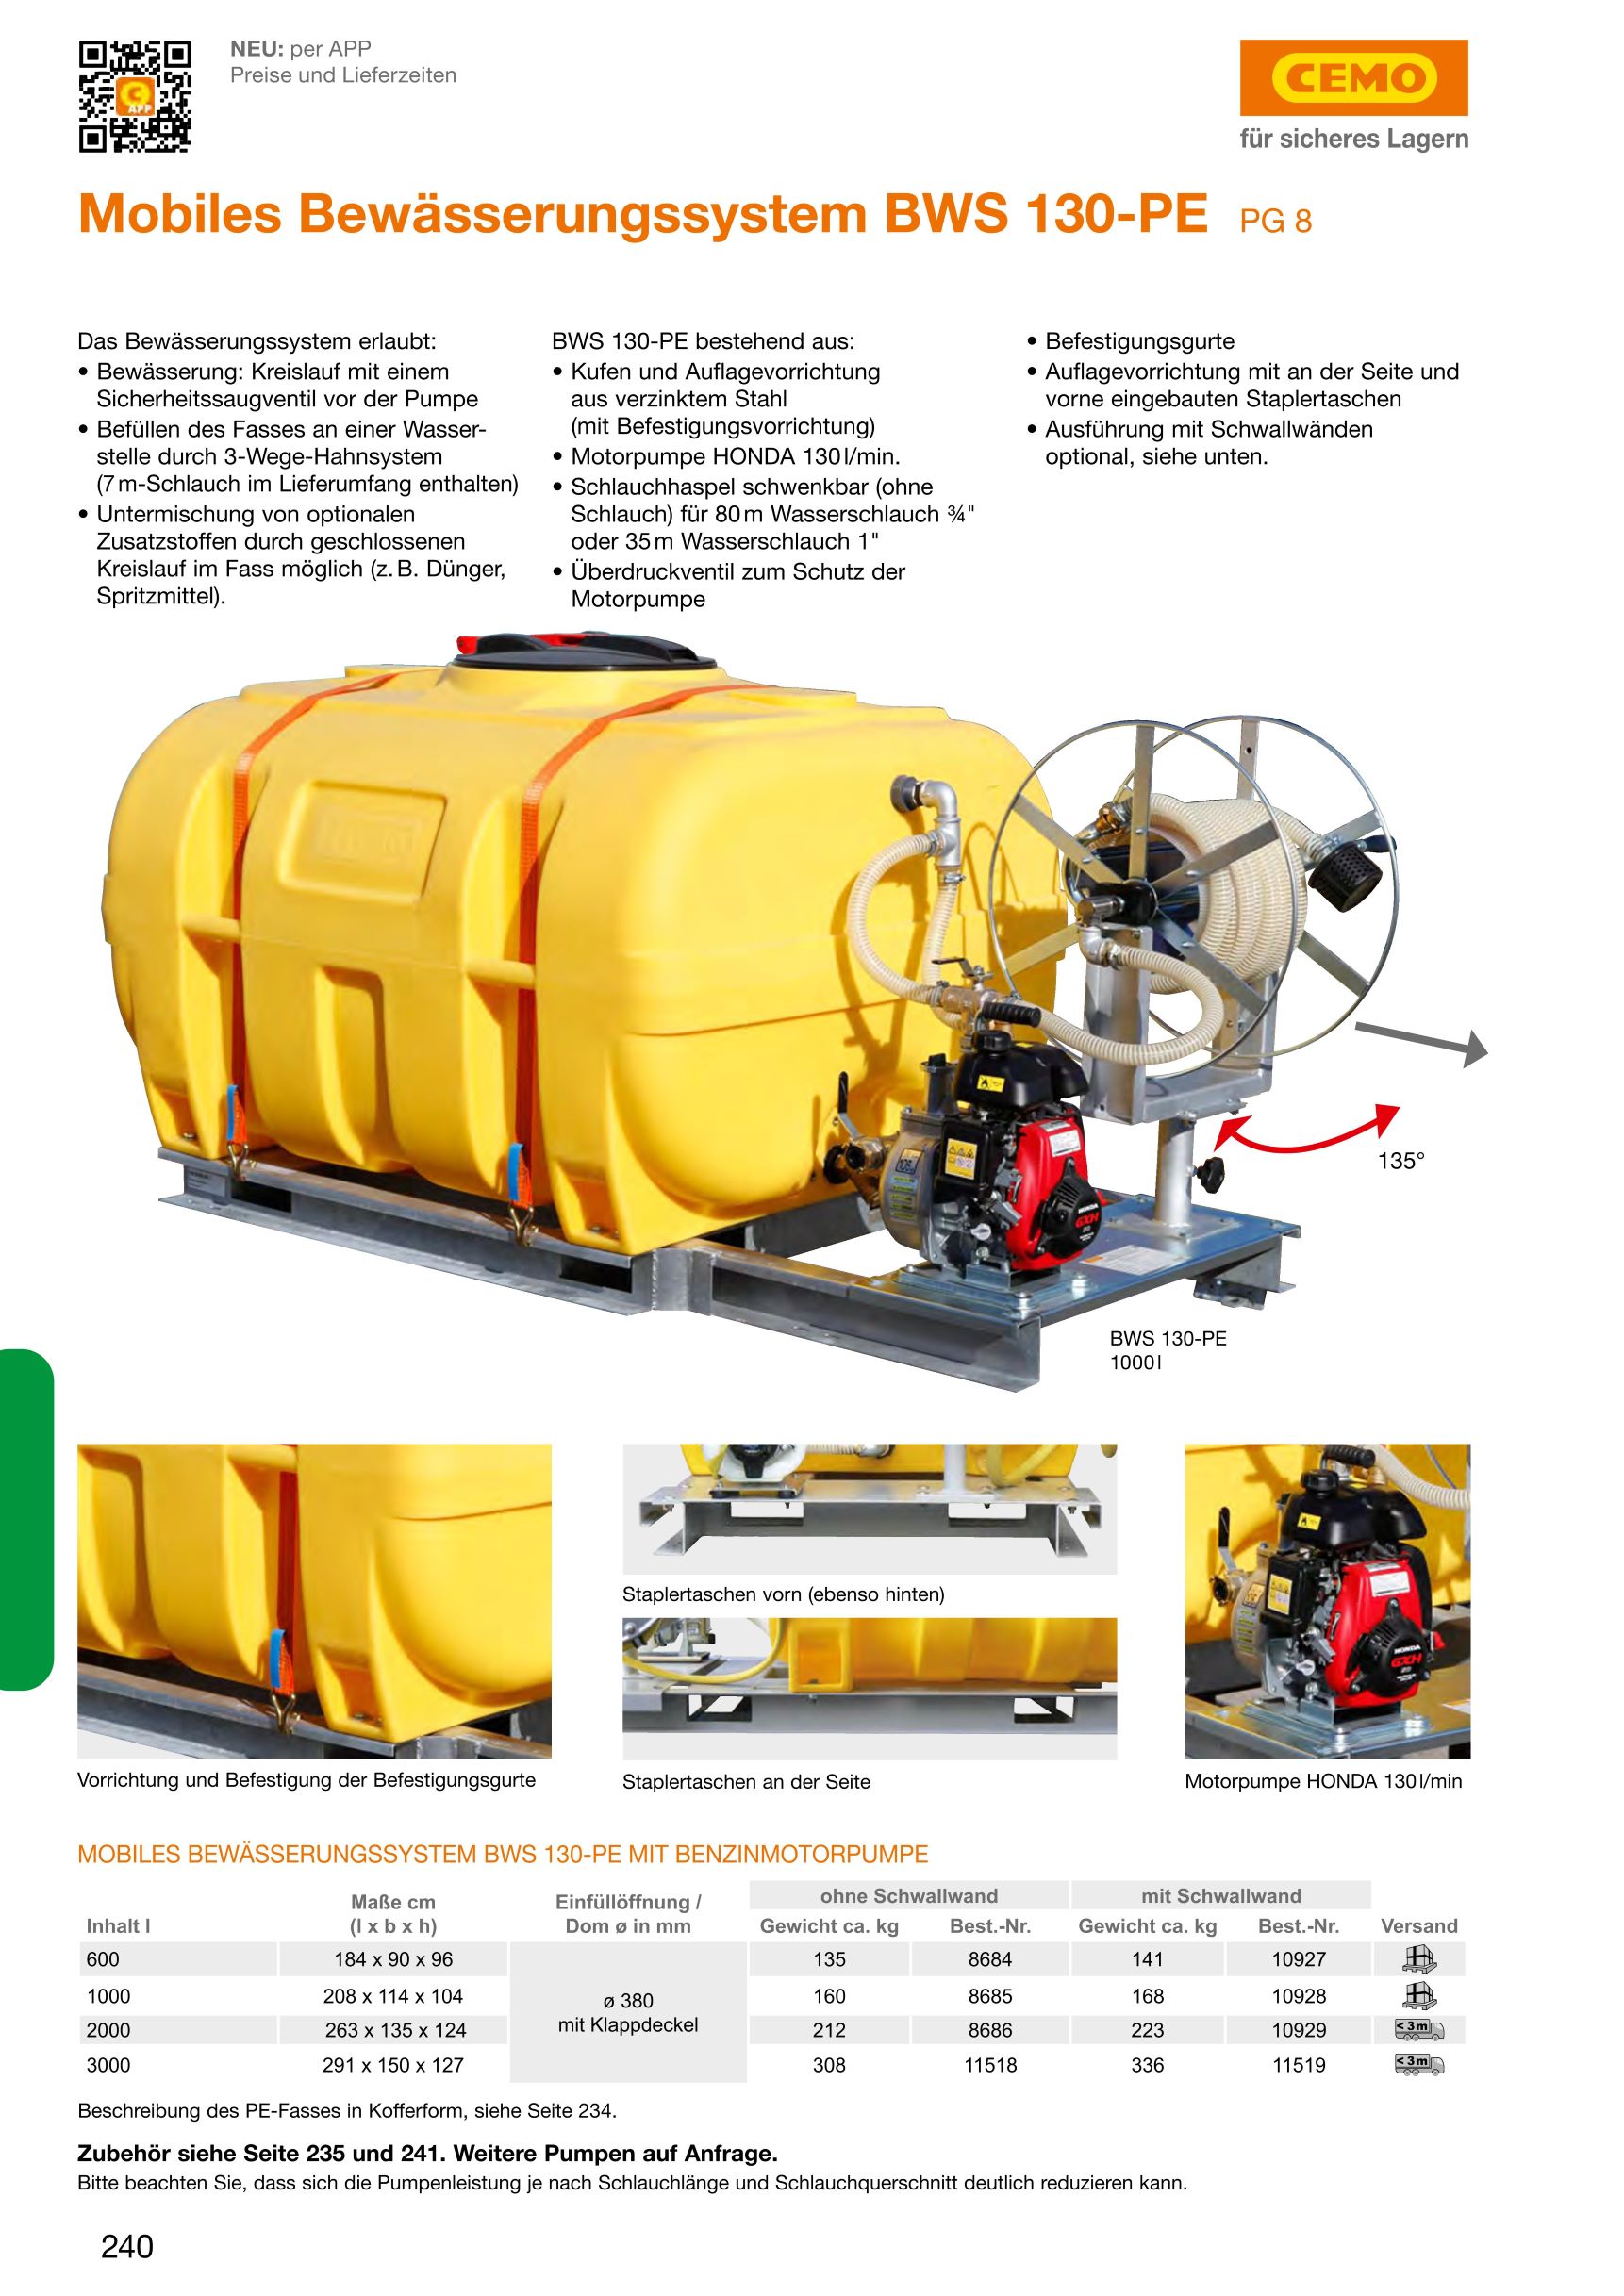 CEMO Mobiles Bewässerungssystem BWS 130-PE, 1000 l, Motorpumpe, Schwallwände - 10928